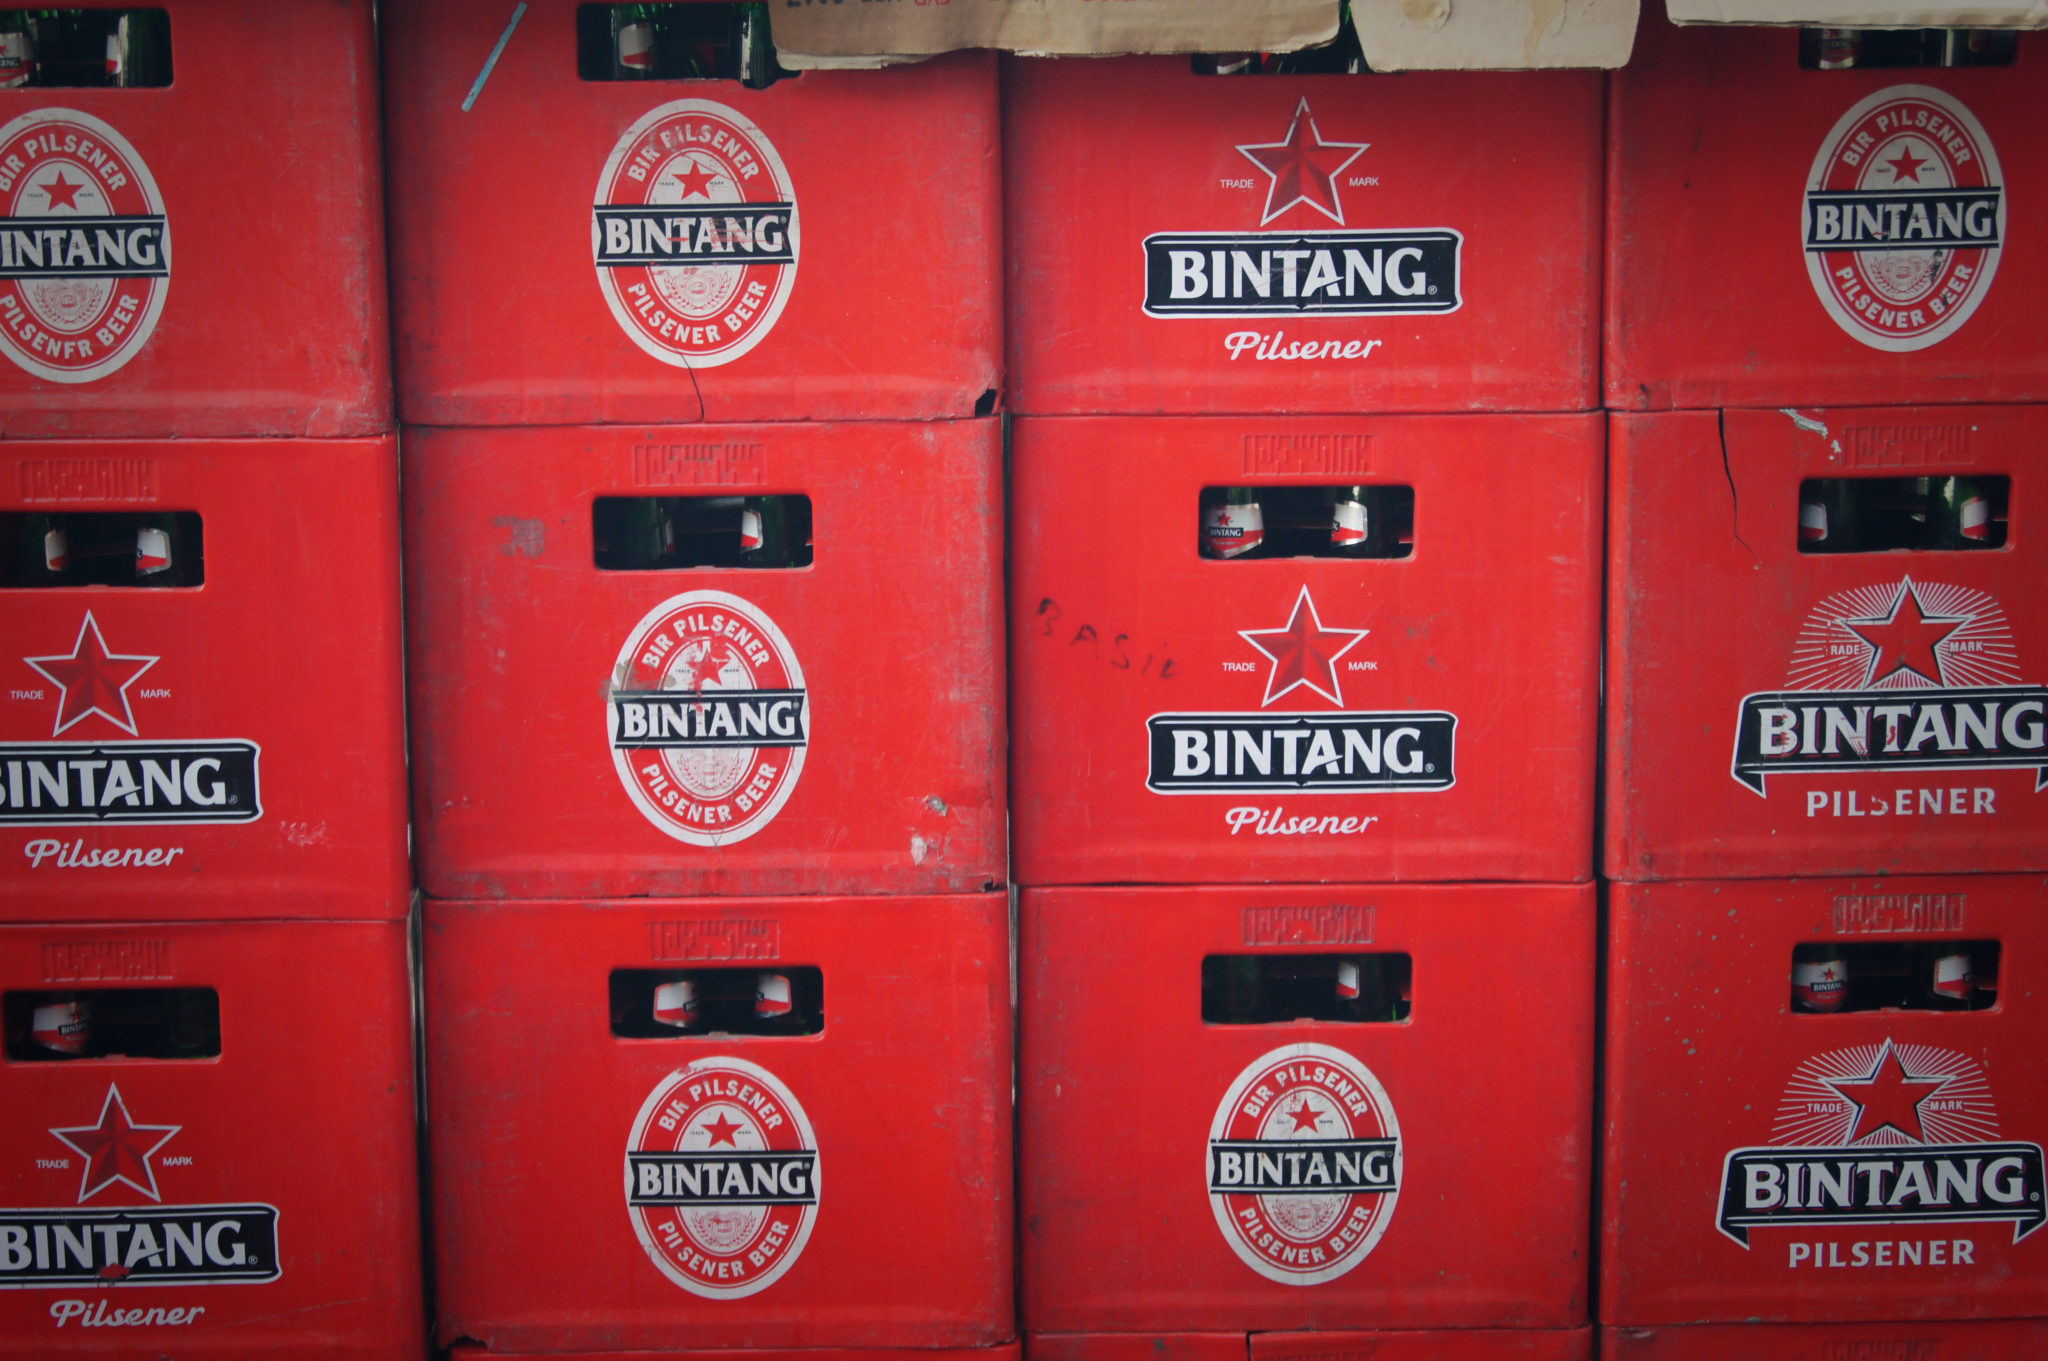 Bintang-Bier ist das Nationalbier in Indonesien